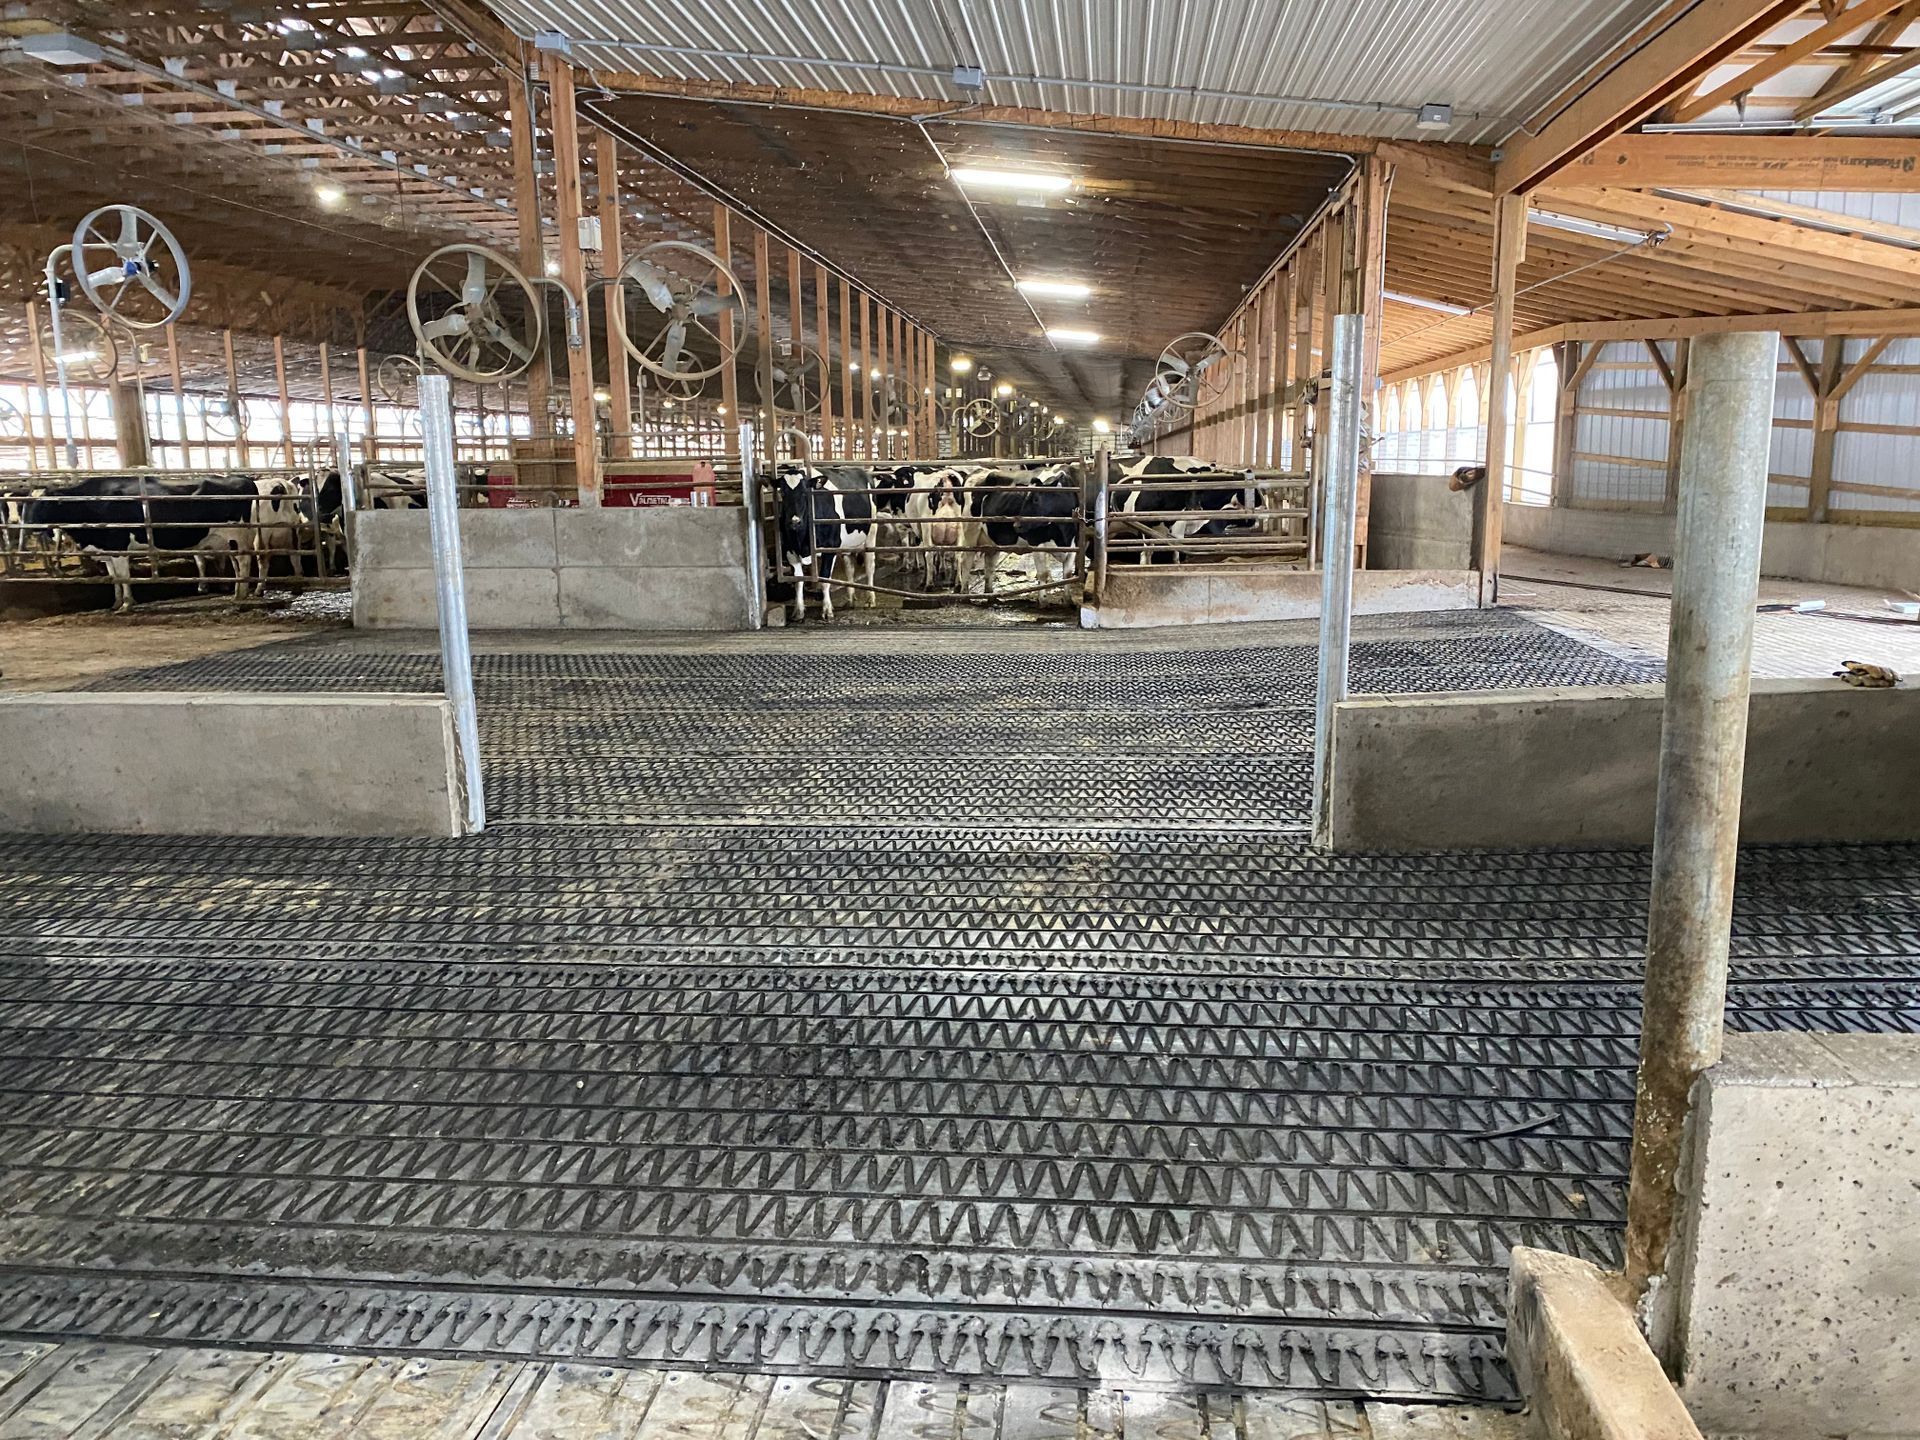 Rubber Mats For Dairy Cattle Barns - Gabel Belting, Inc.